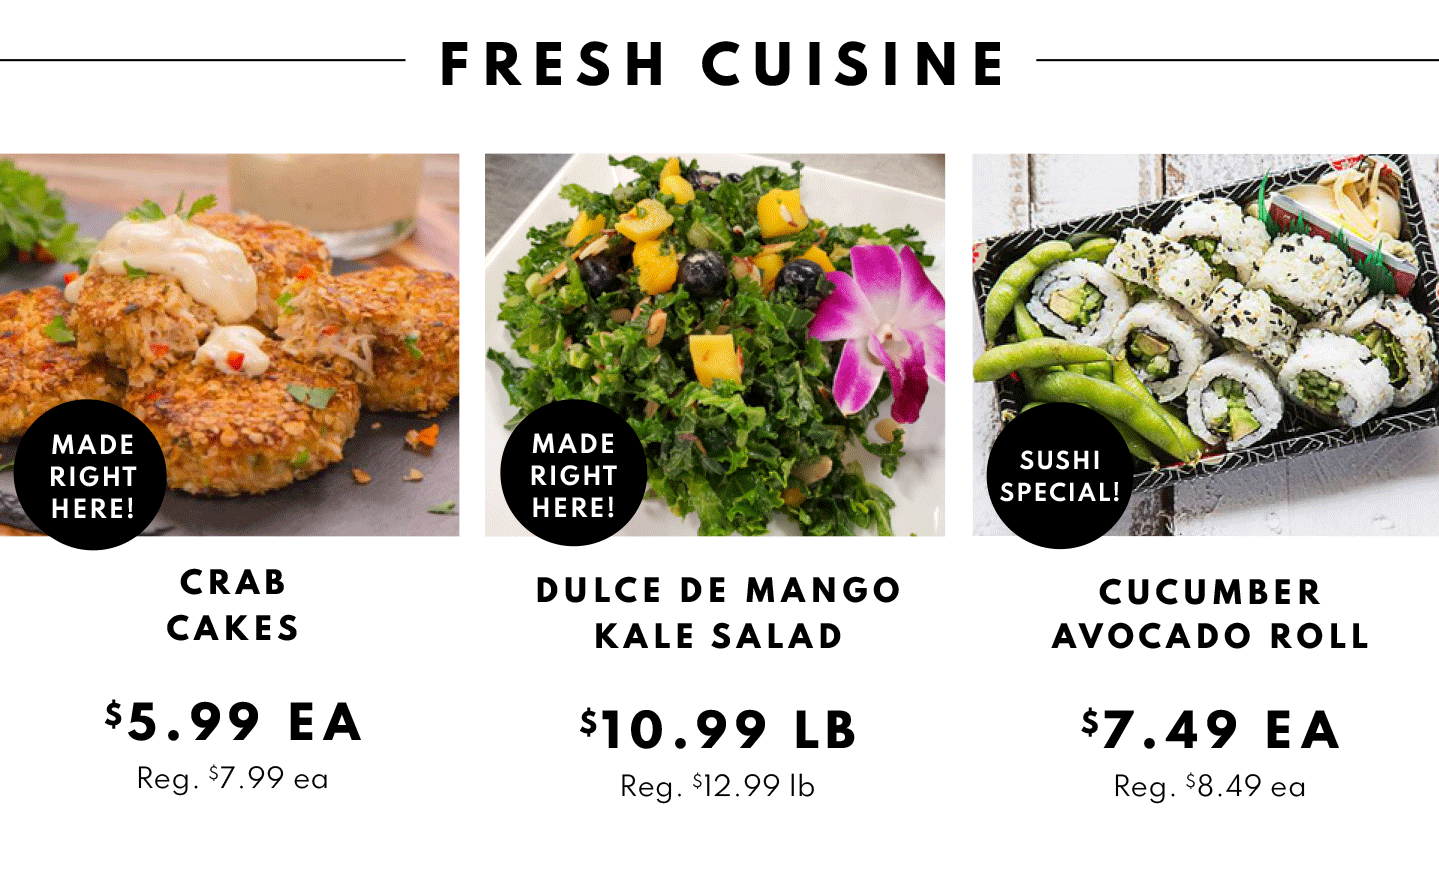 Crab Cakes $5.99 ea, Dulce De MAngo Kale Salad $10.99 lb and Cucumber Avocado Roll $7.49 ea